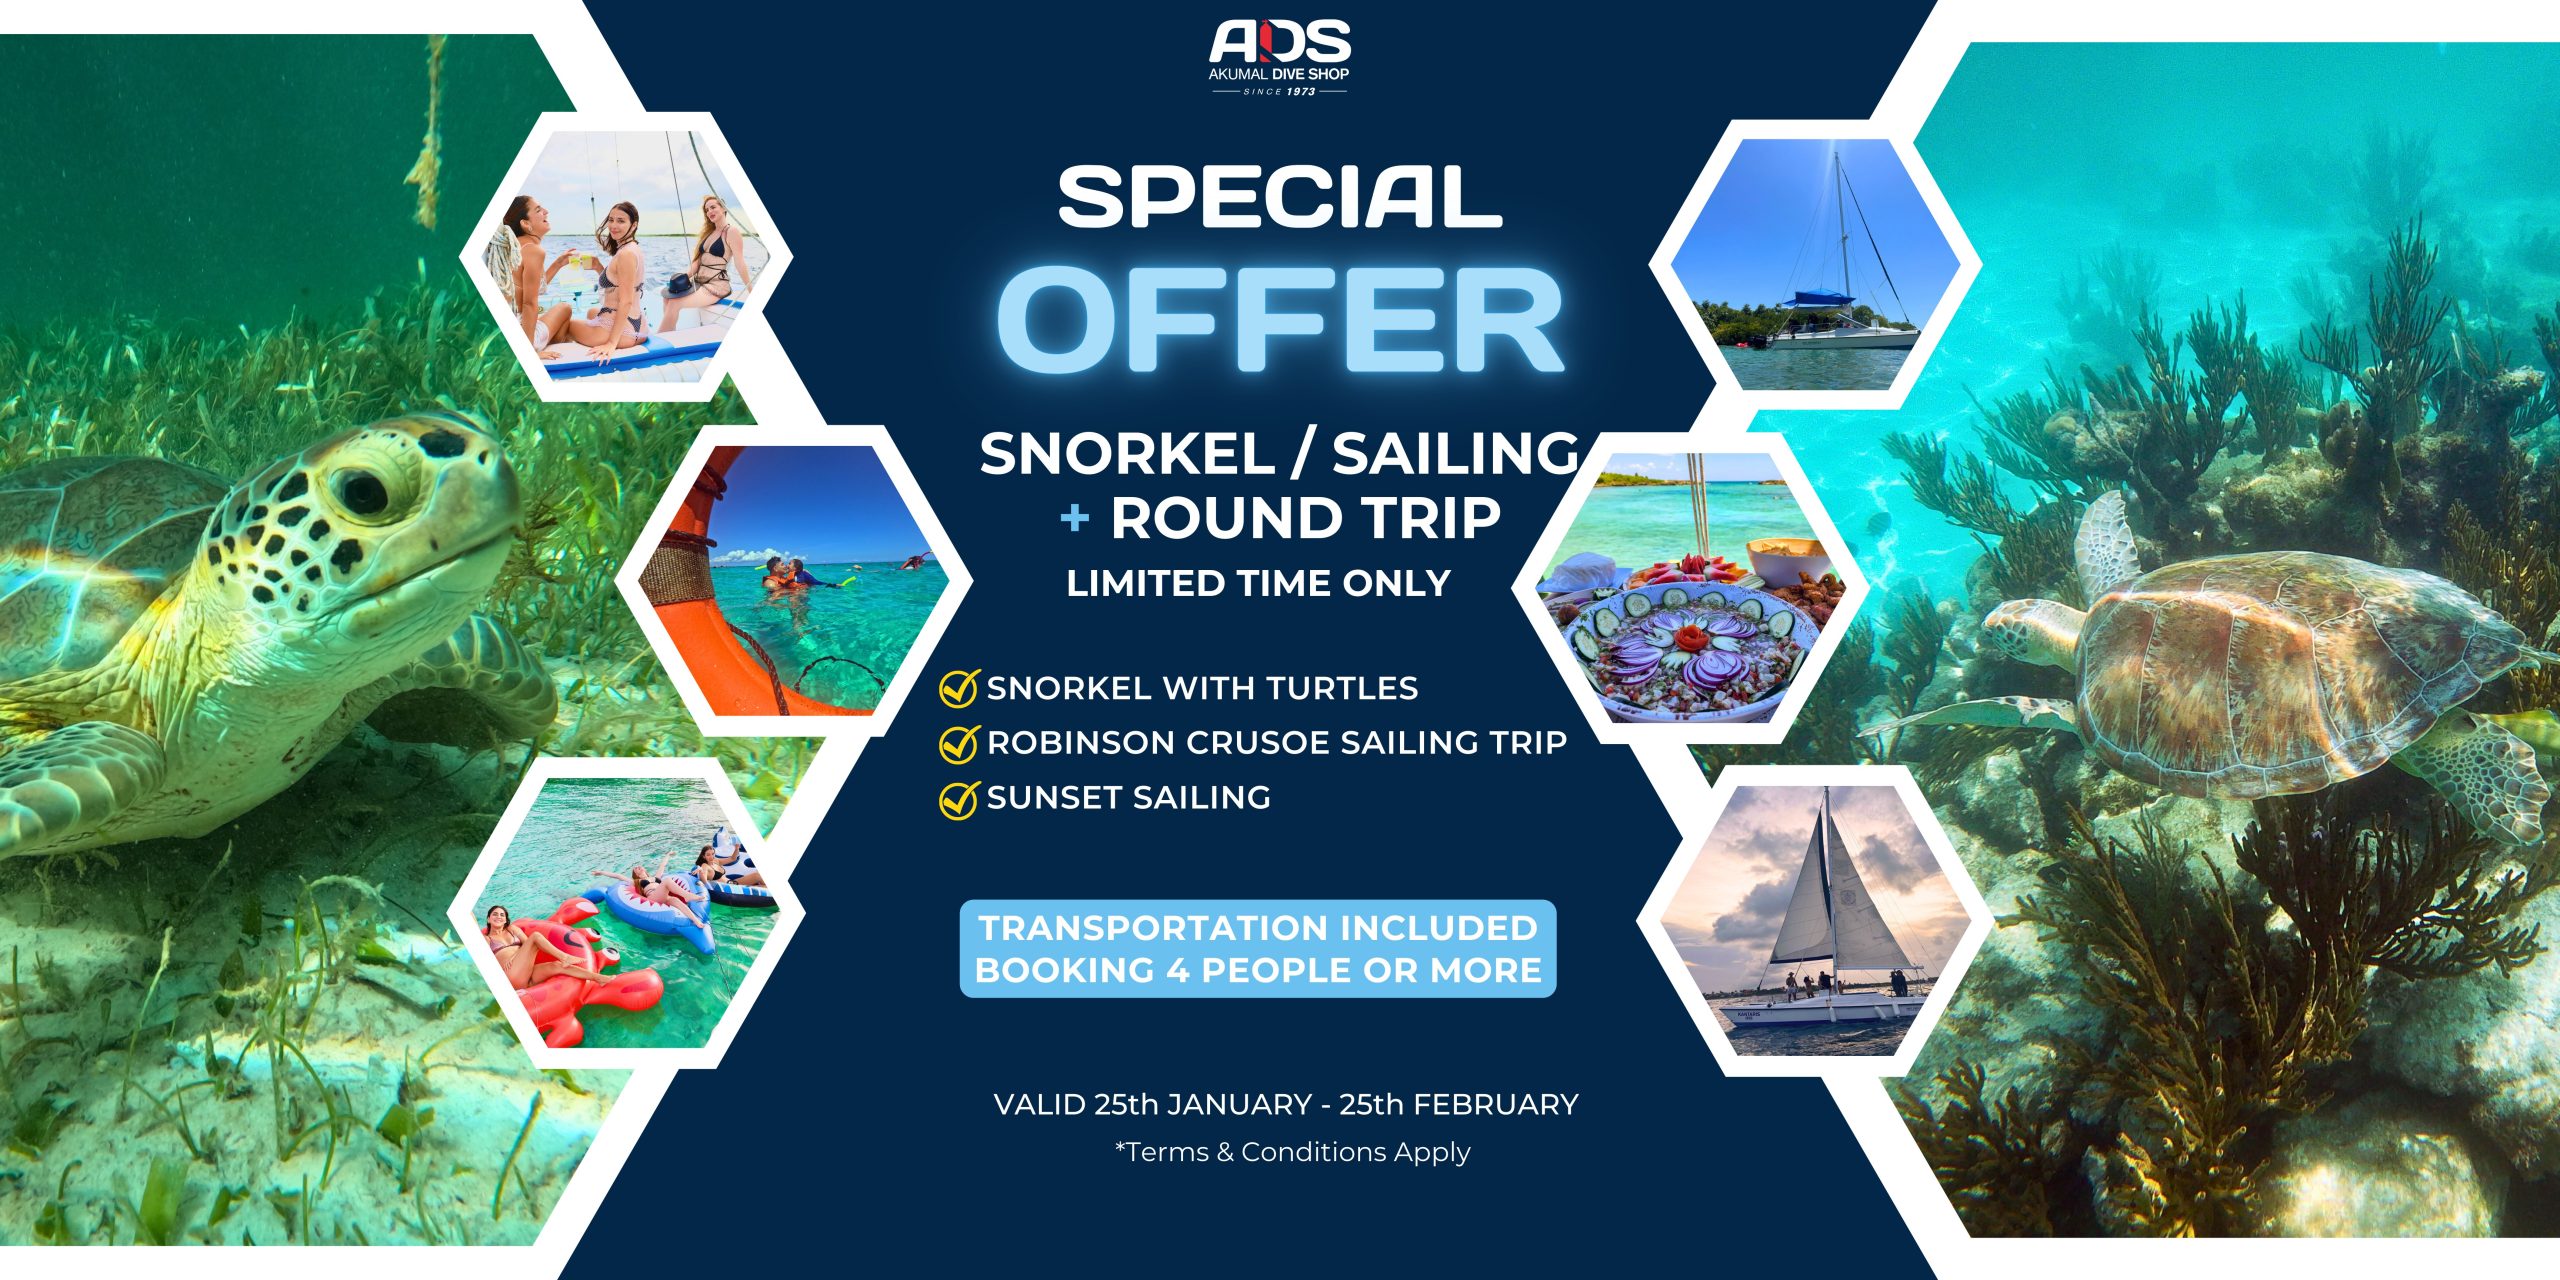 Special offer snorkel